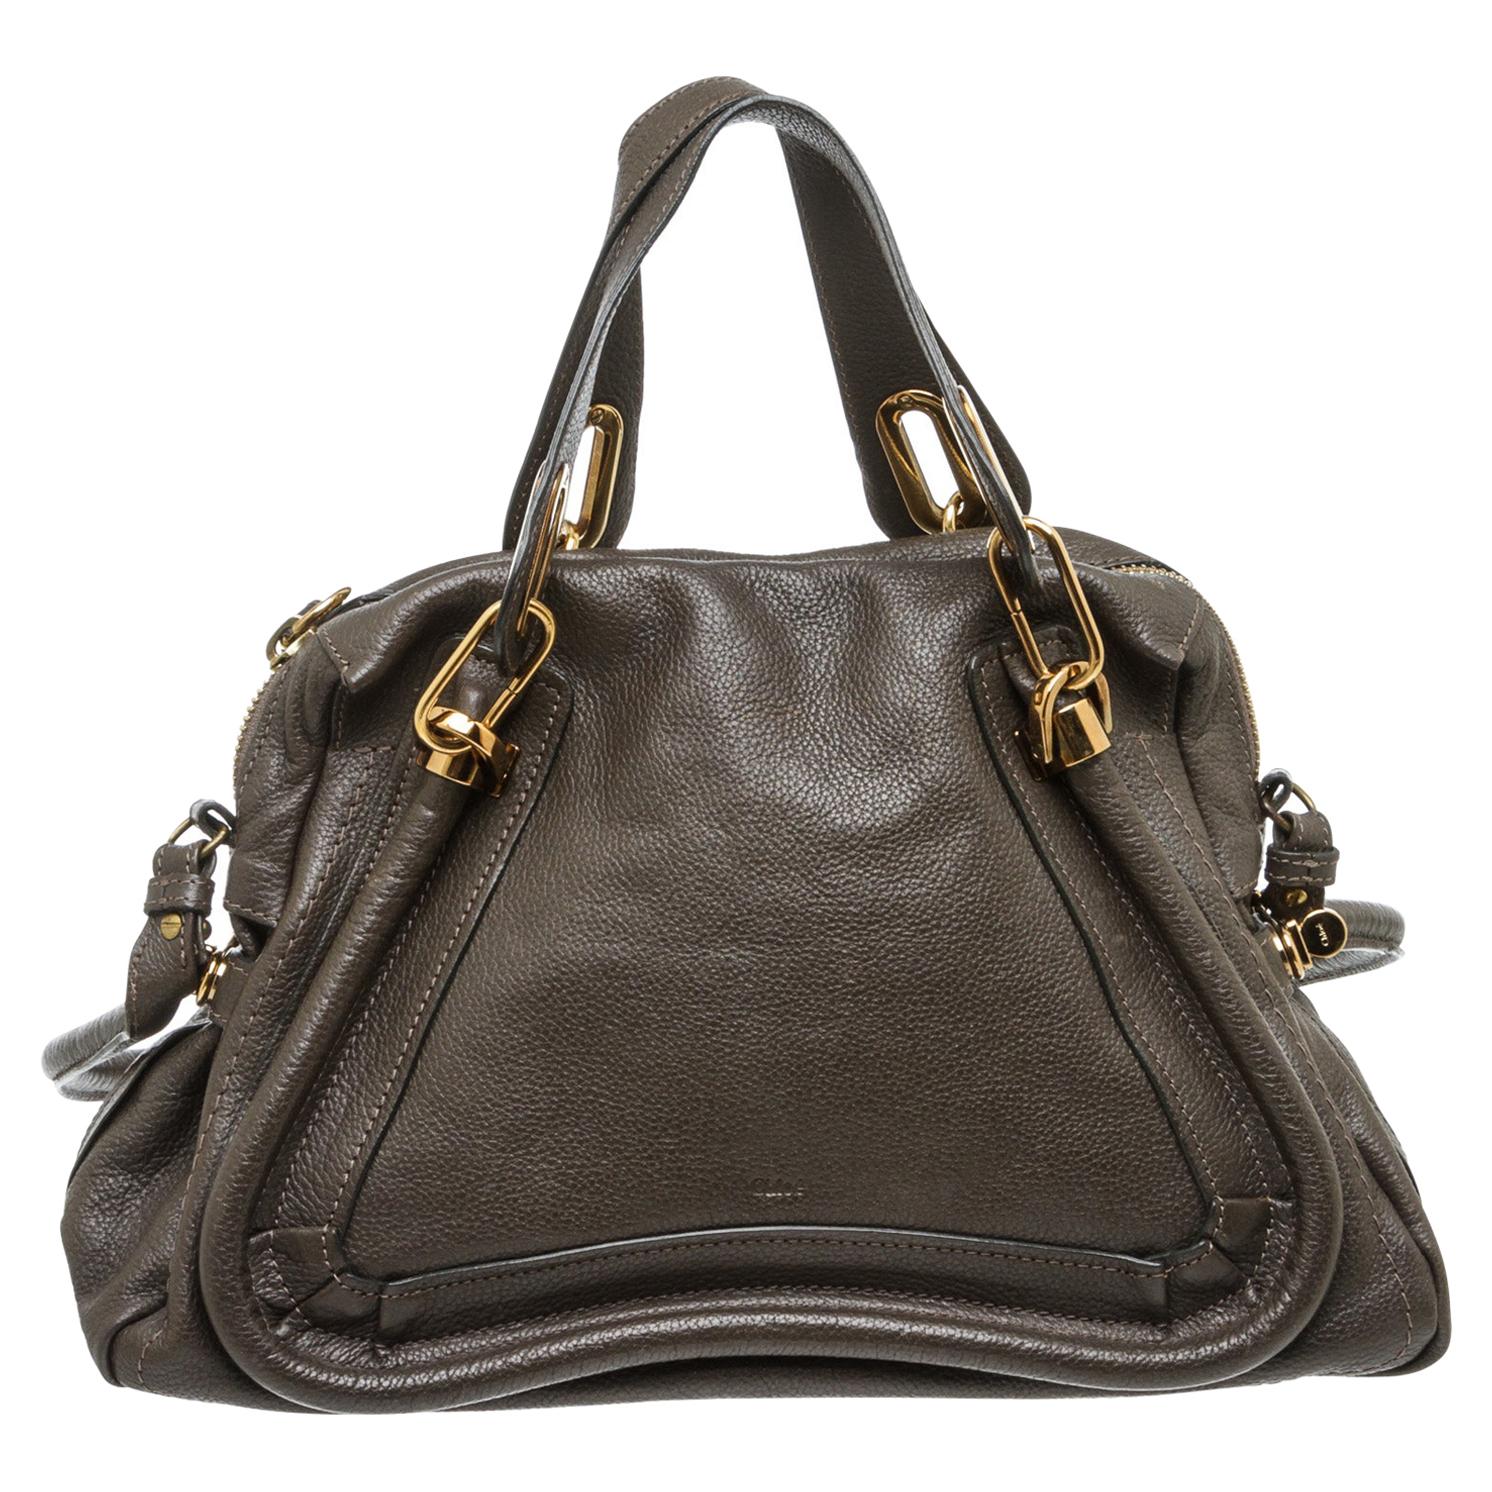 Chloe Brown Leather Paraty Medium Satchel Handbag